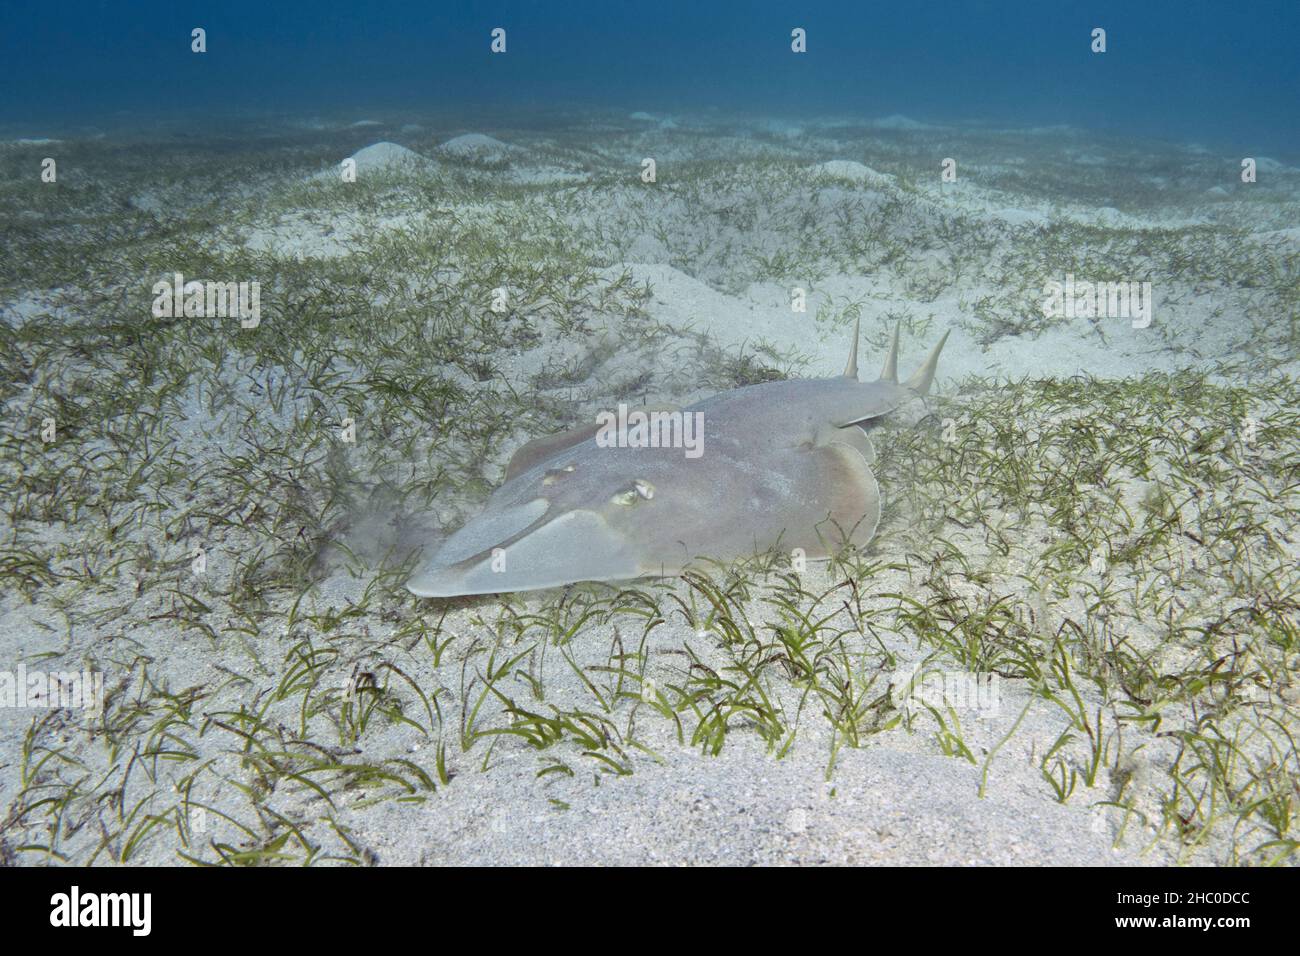 Halavi guitarfish (Glaucostegus halavi) on the sea bottom. Guitar shark fish. Stock Photo